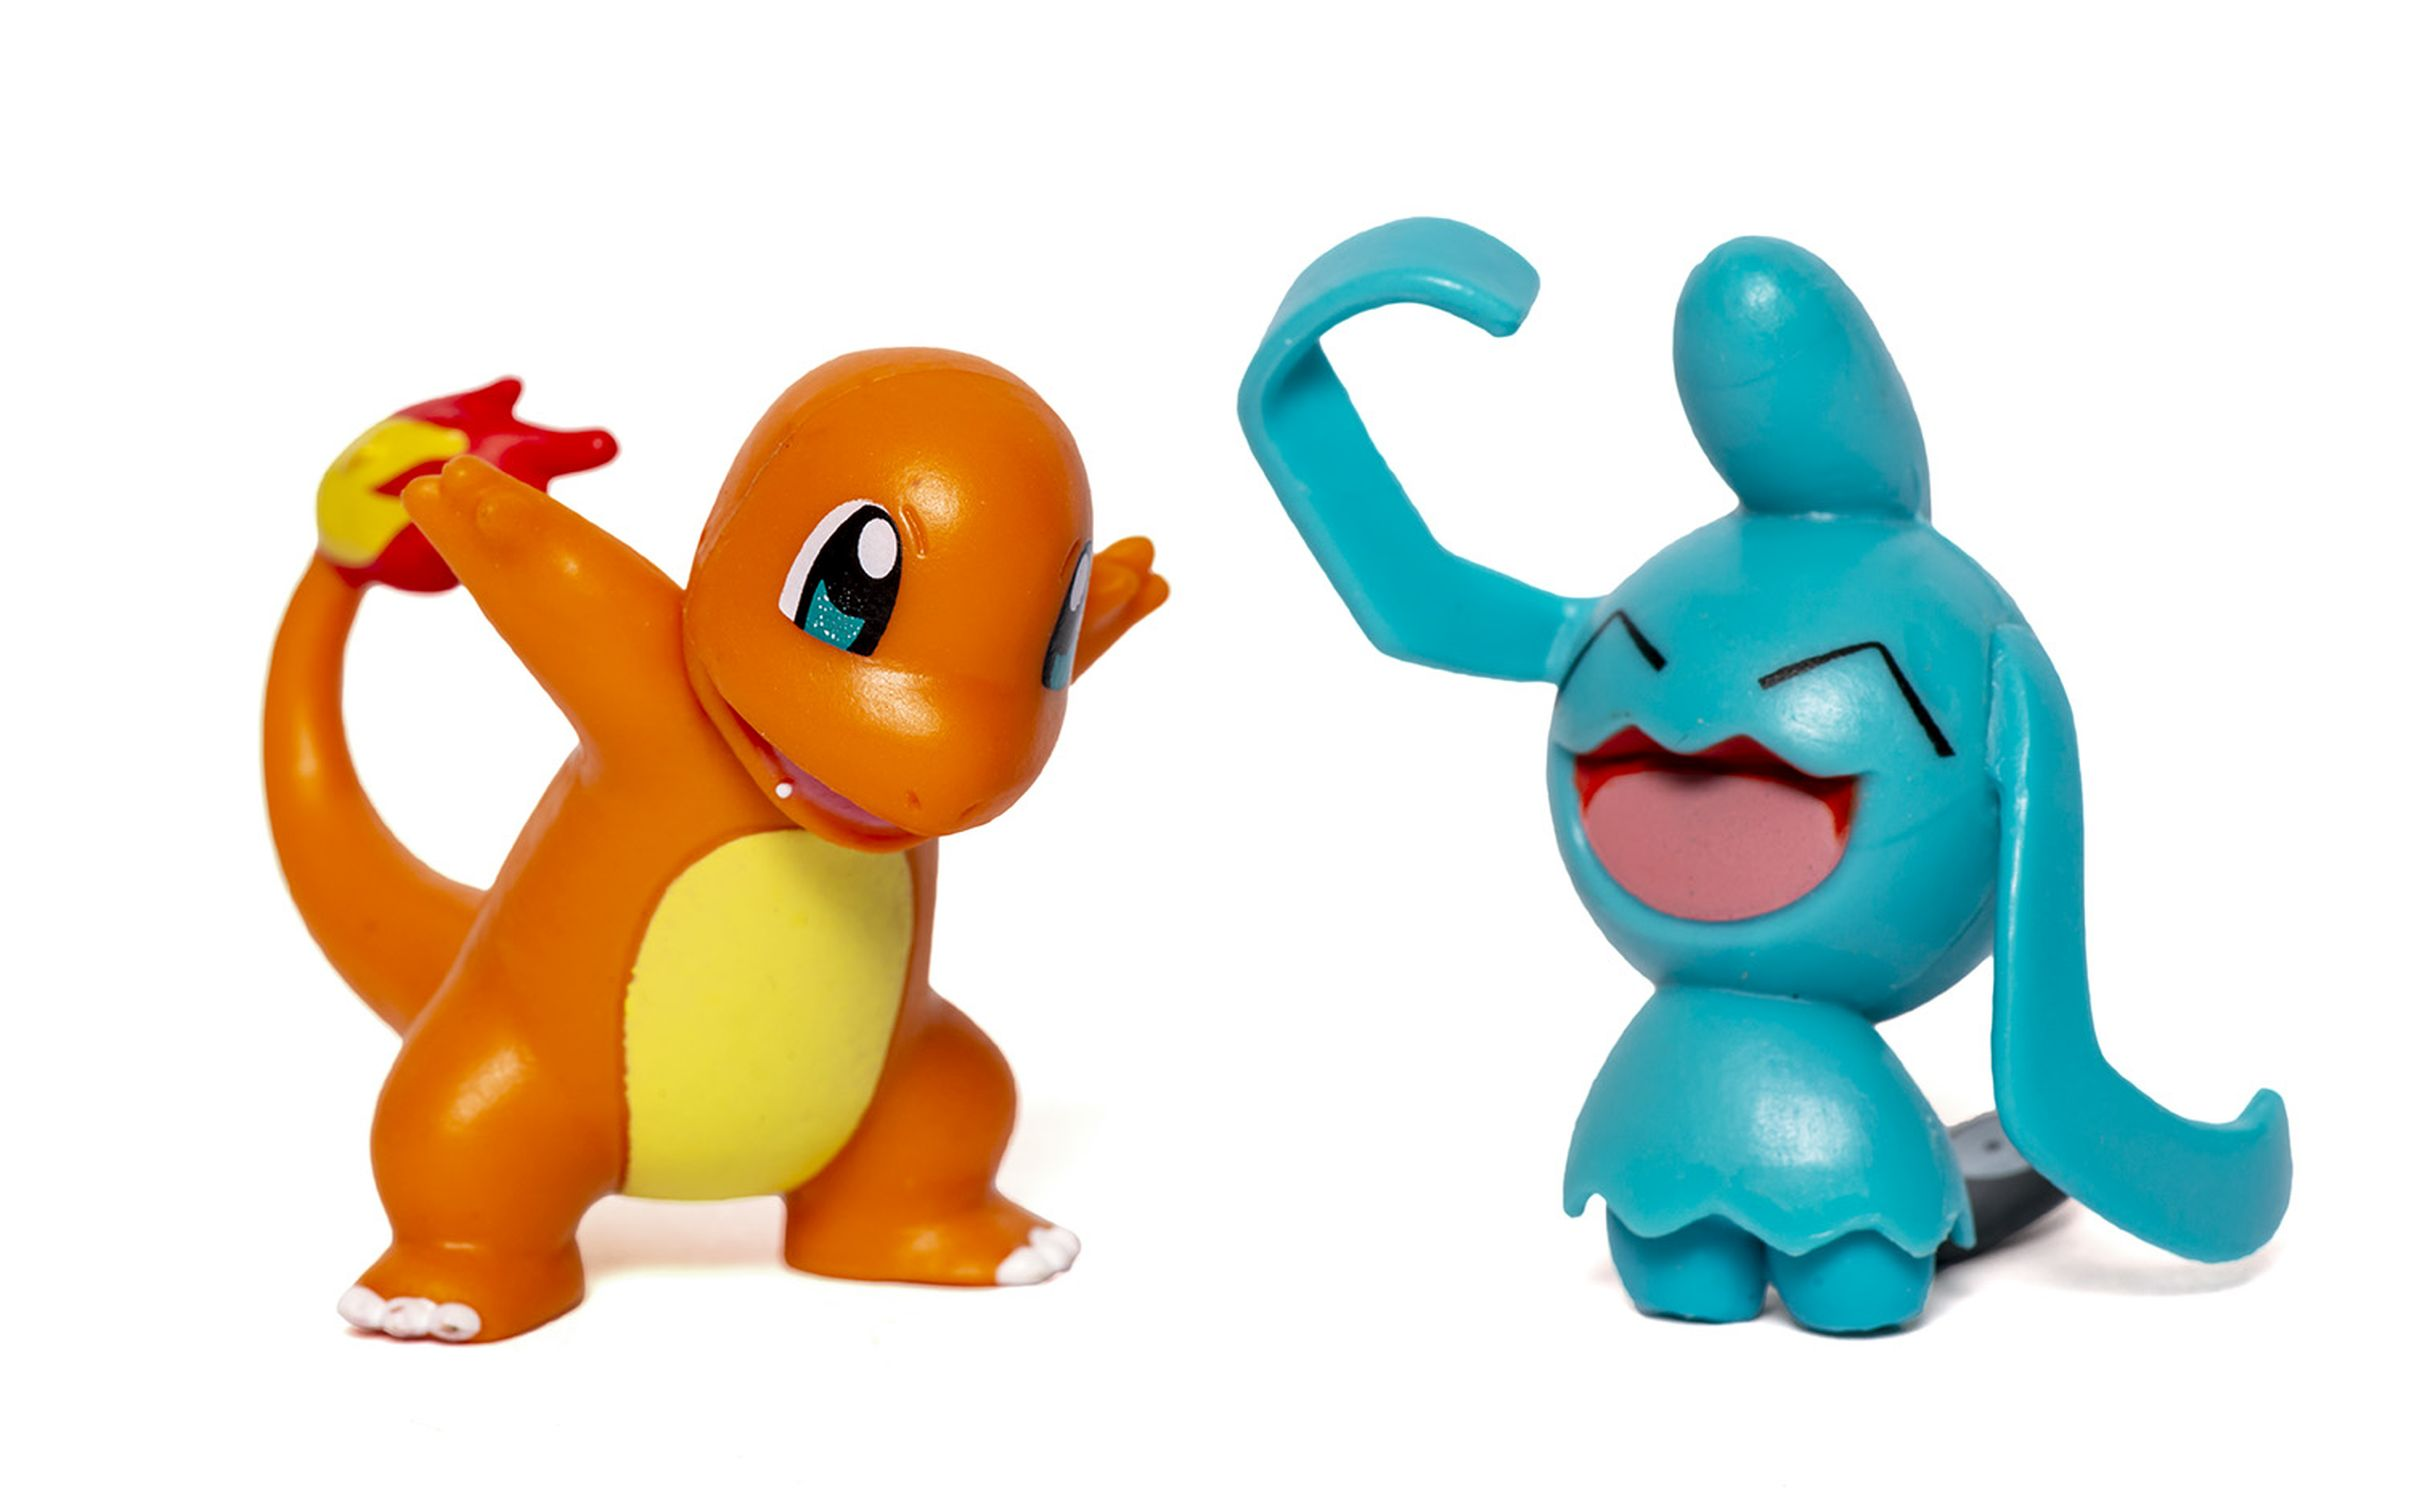 Glumanda Pokémon Pack & Isso Figure - - Battle